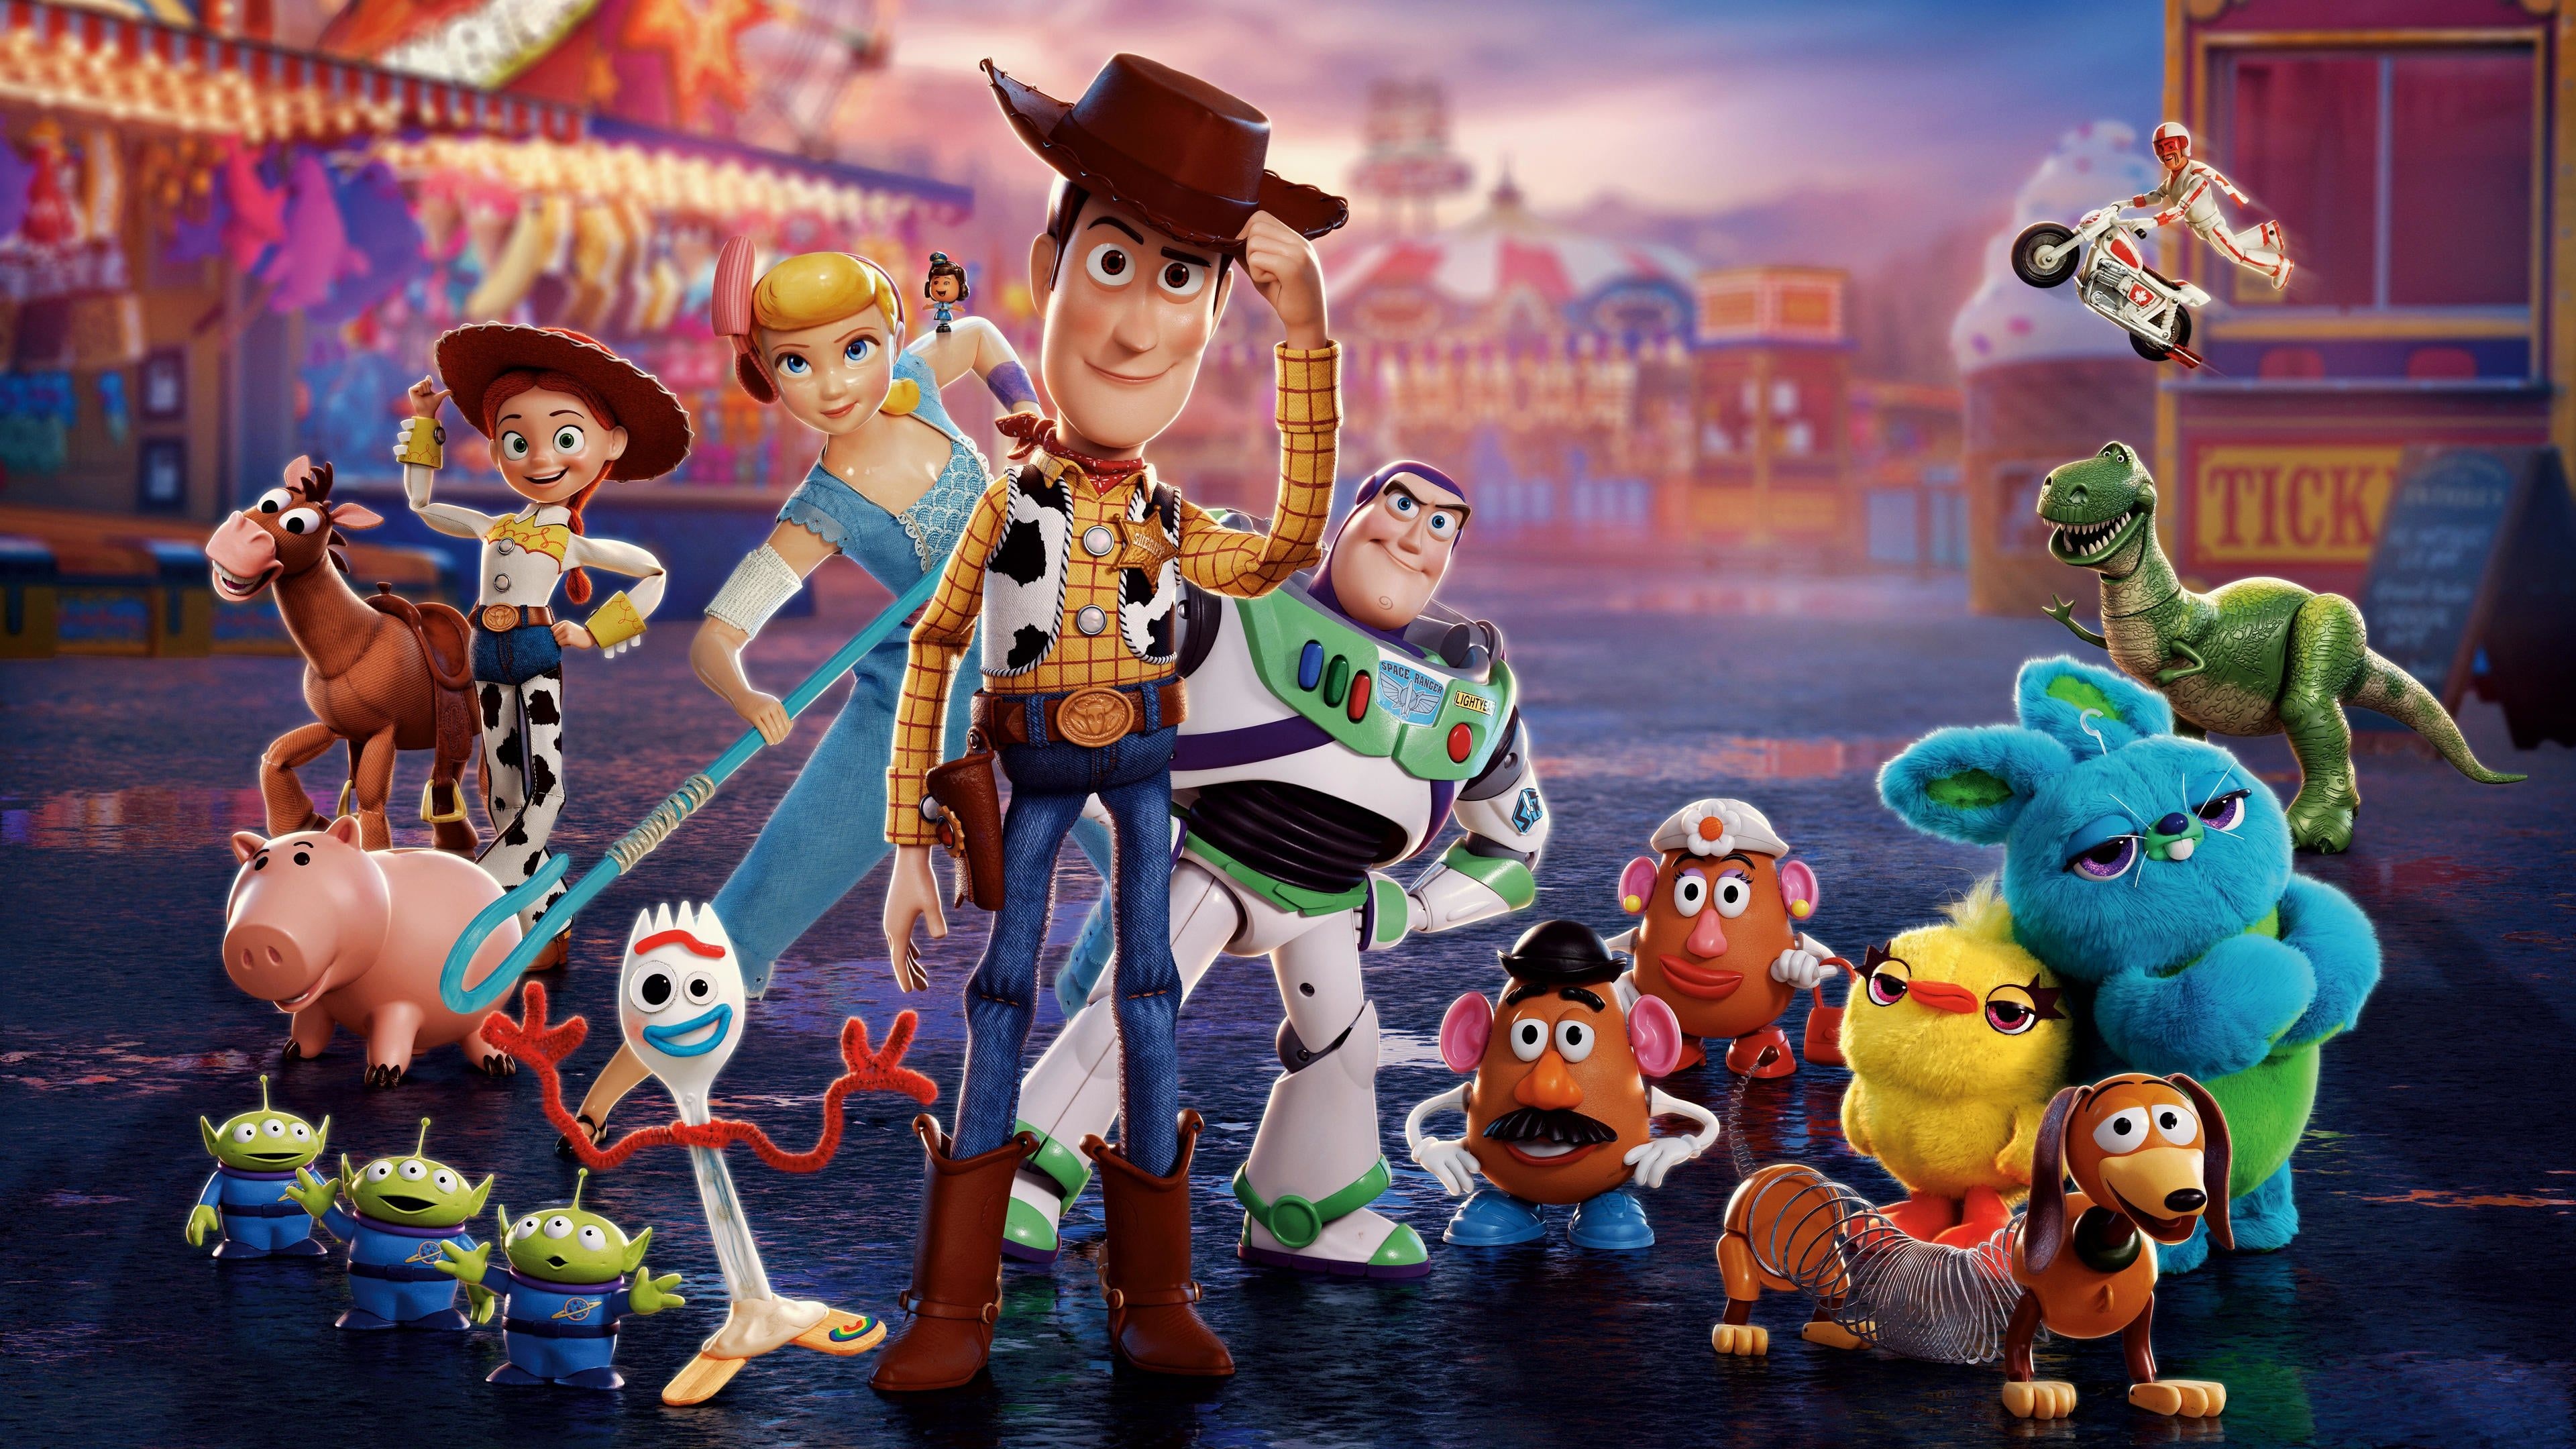 Toy Story 4 desktop wallpapers, Desktop backgrounds, Adorable characters, Animated joy, 3840x2160 4K Desktop